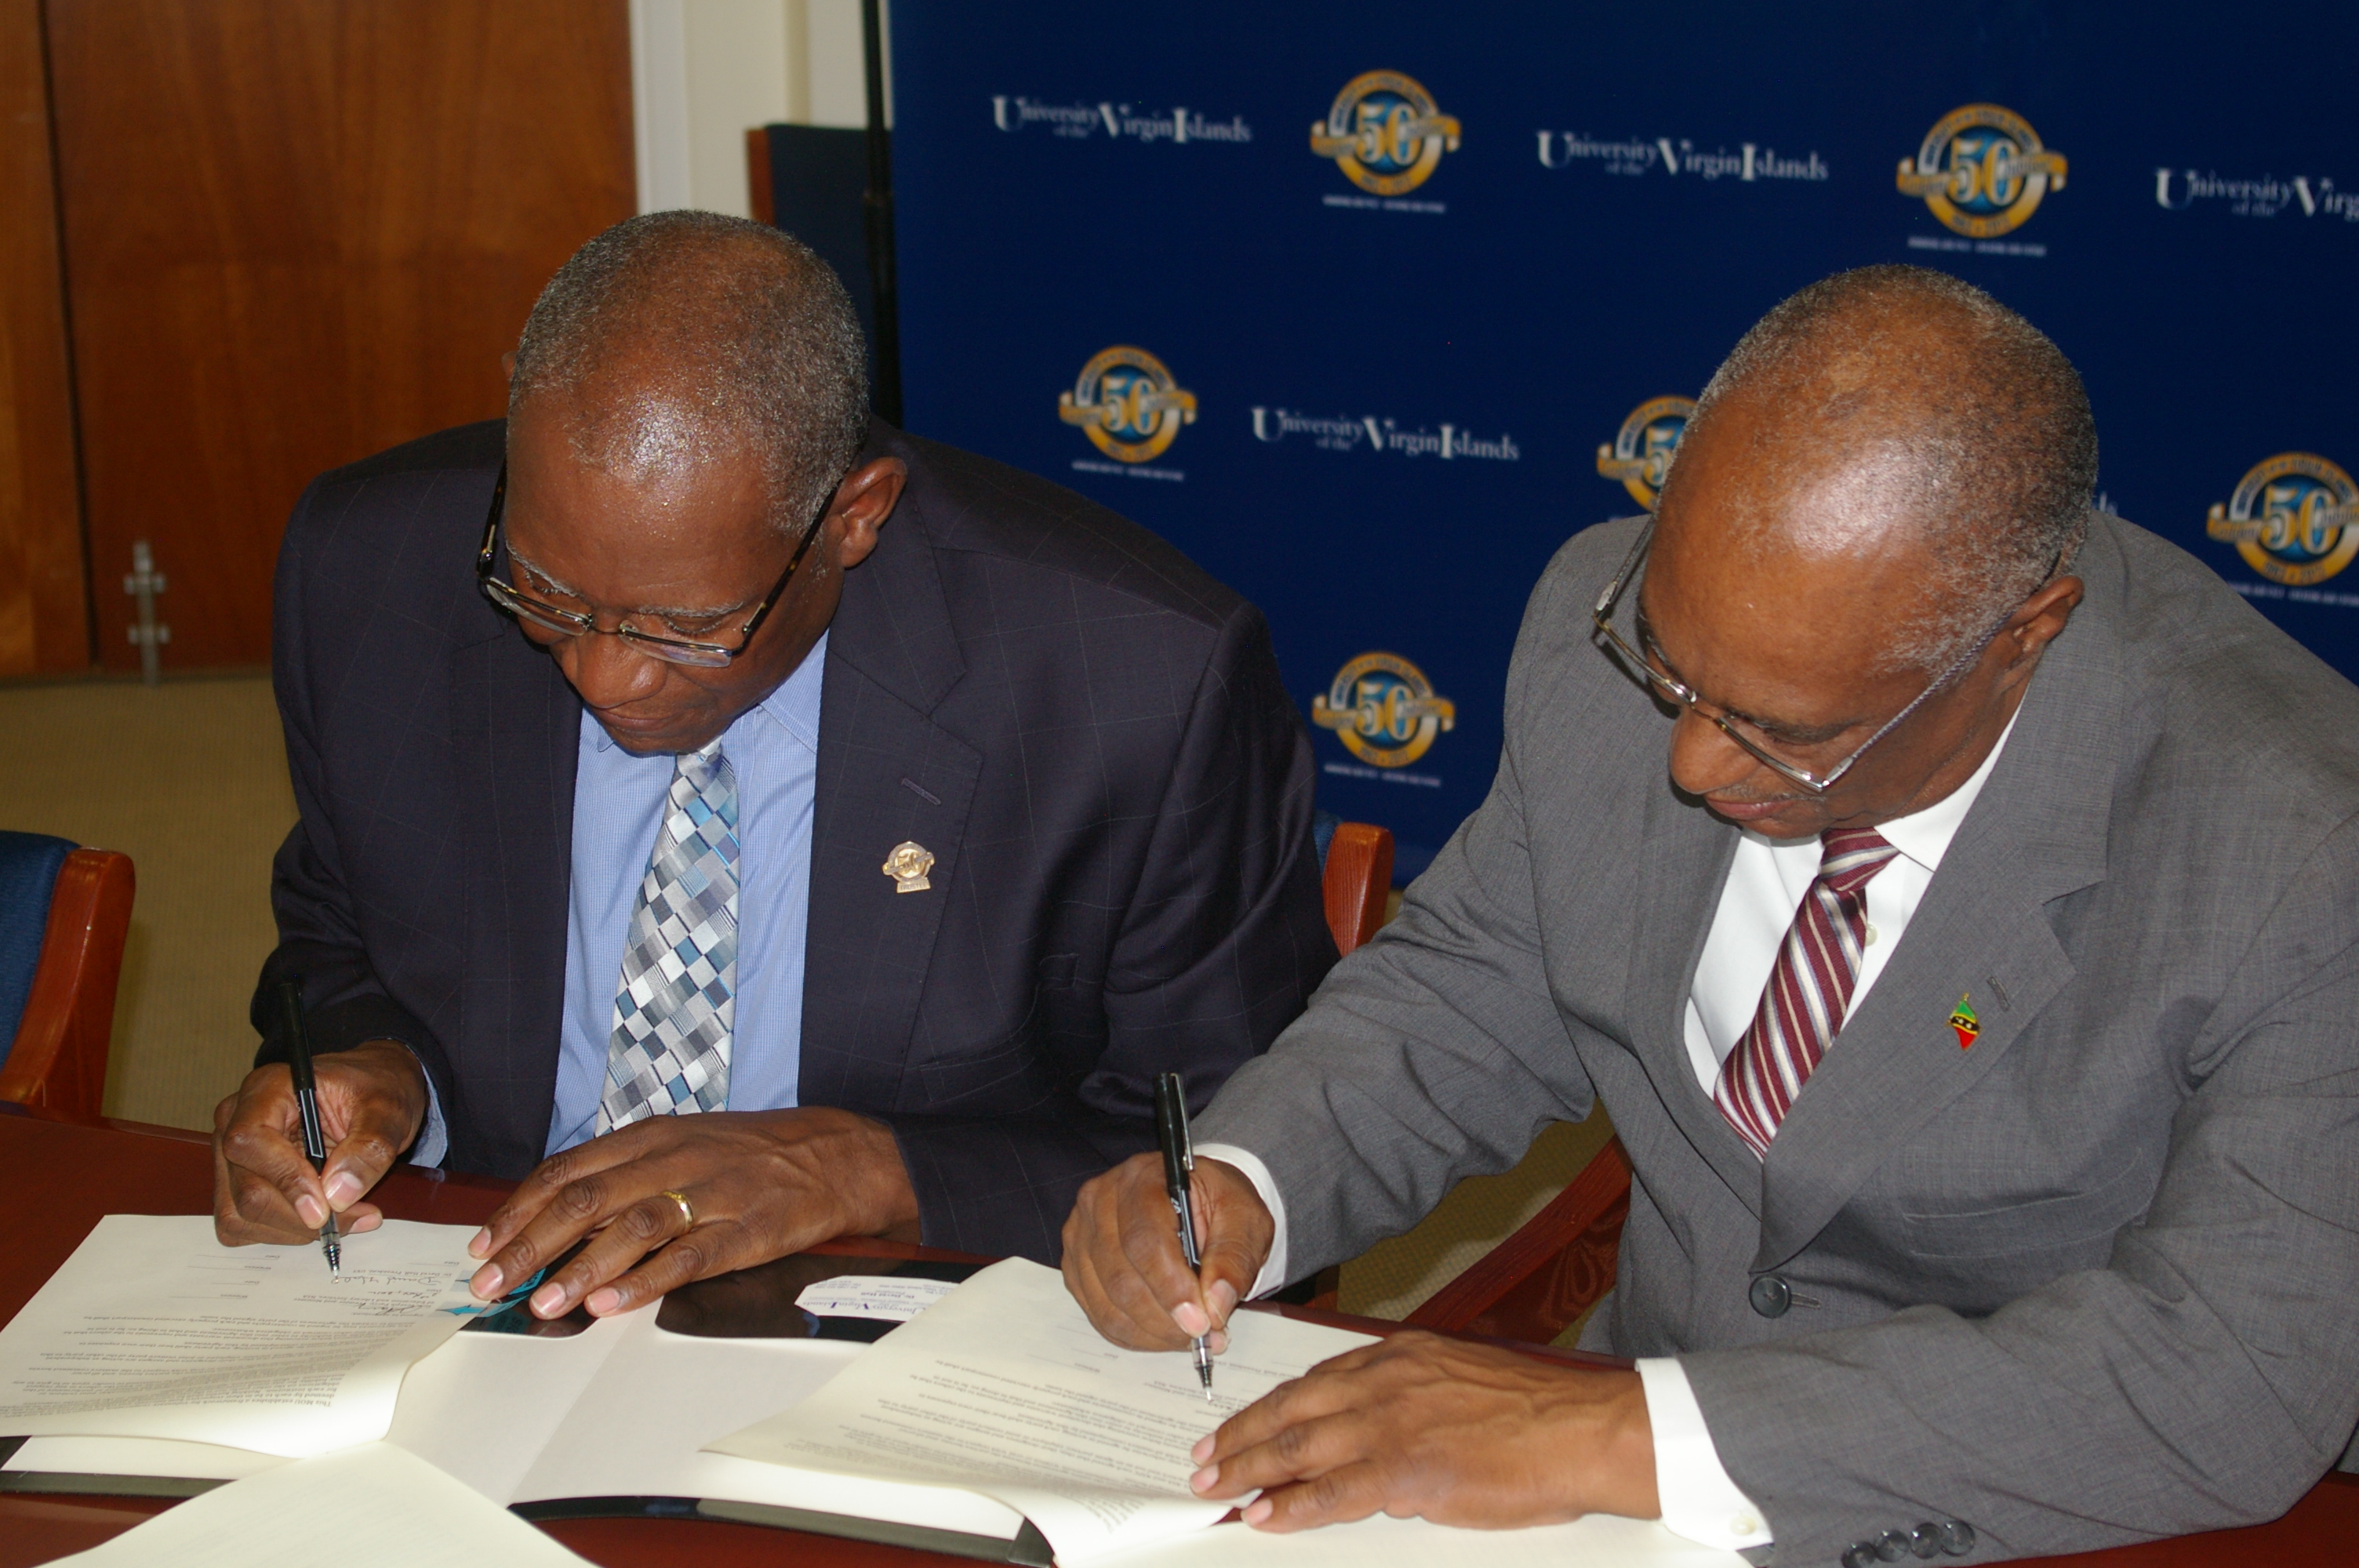 University of the Virgin Islands President, Mr. David Hall and Premier of Nevis, Hon. Joseph Parry